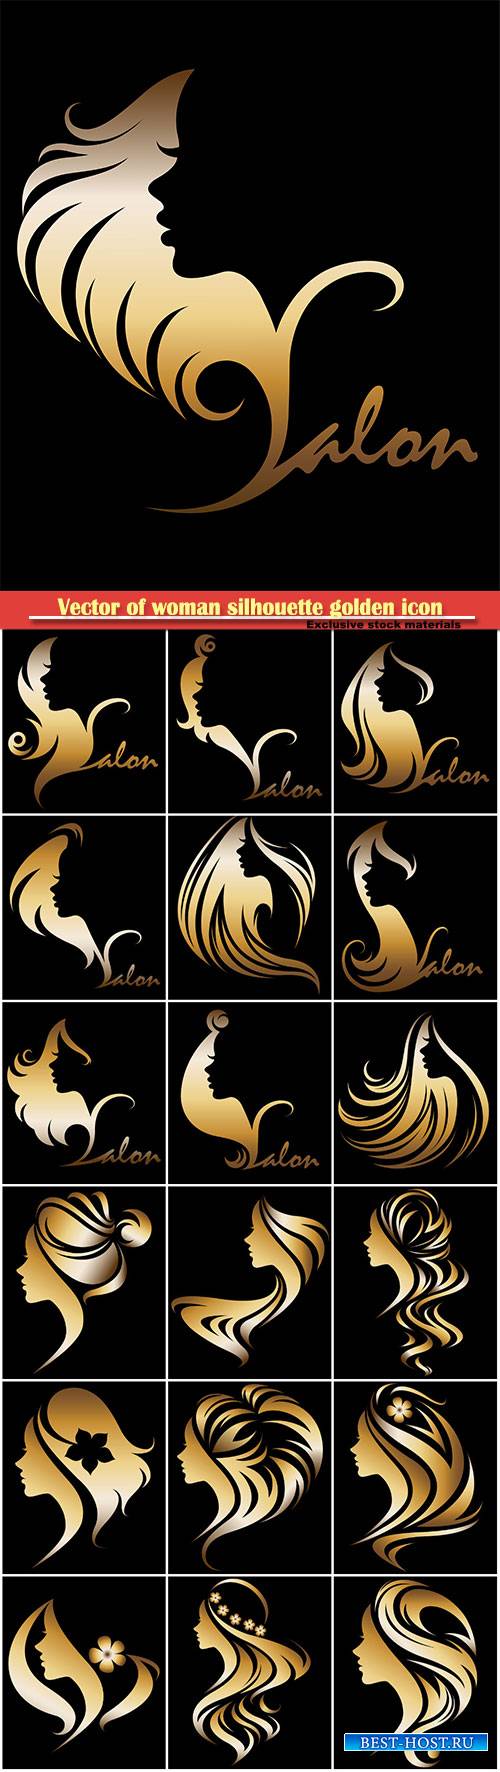 Vector of woman silhouette golden icon, logos for beauty salon